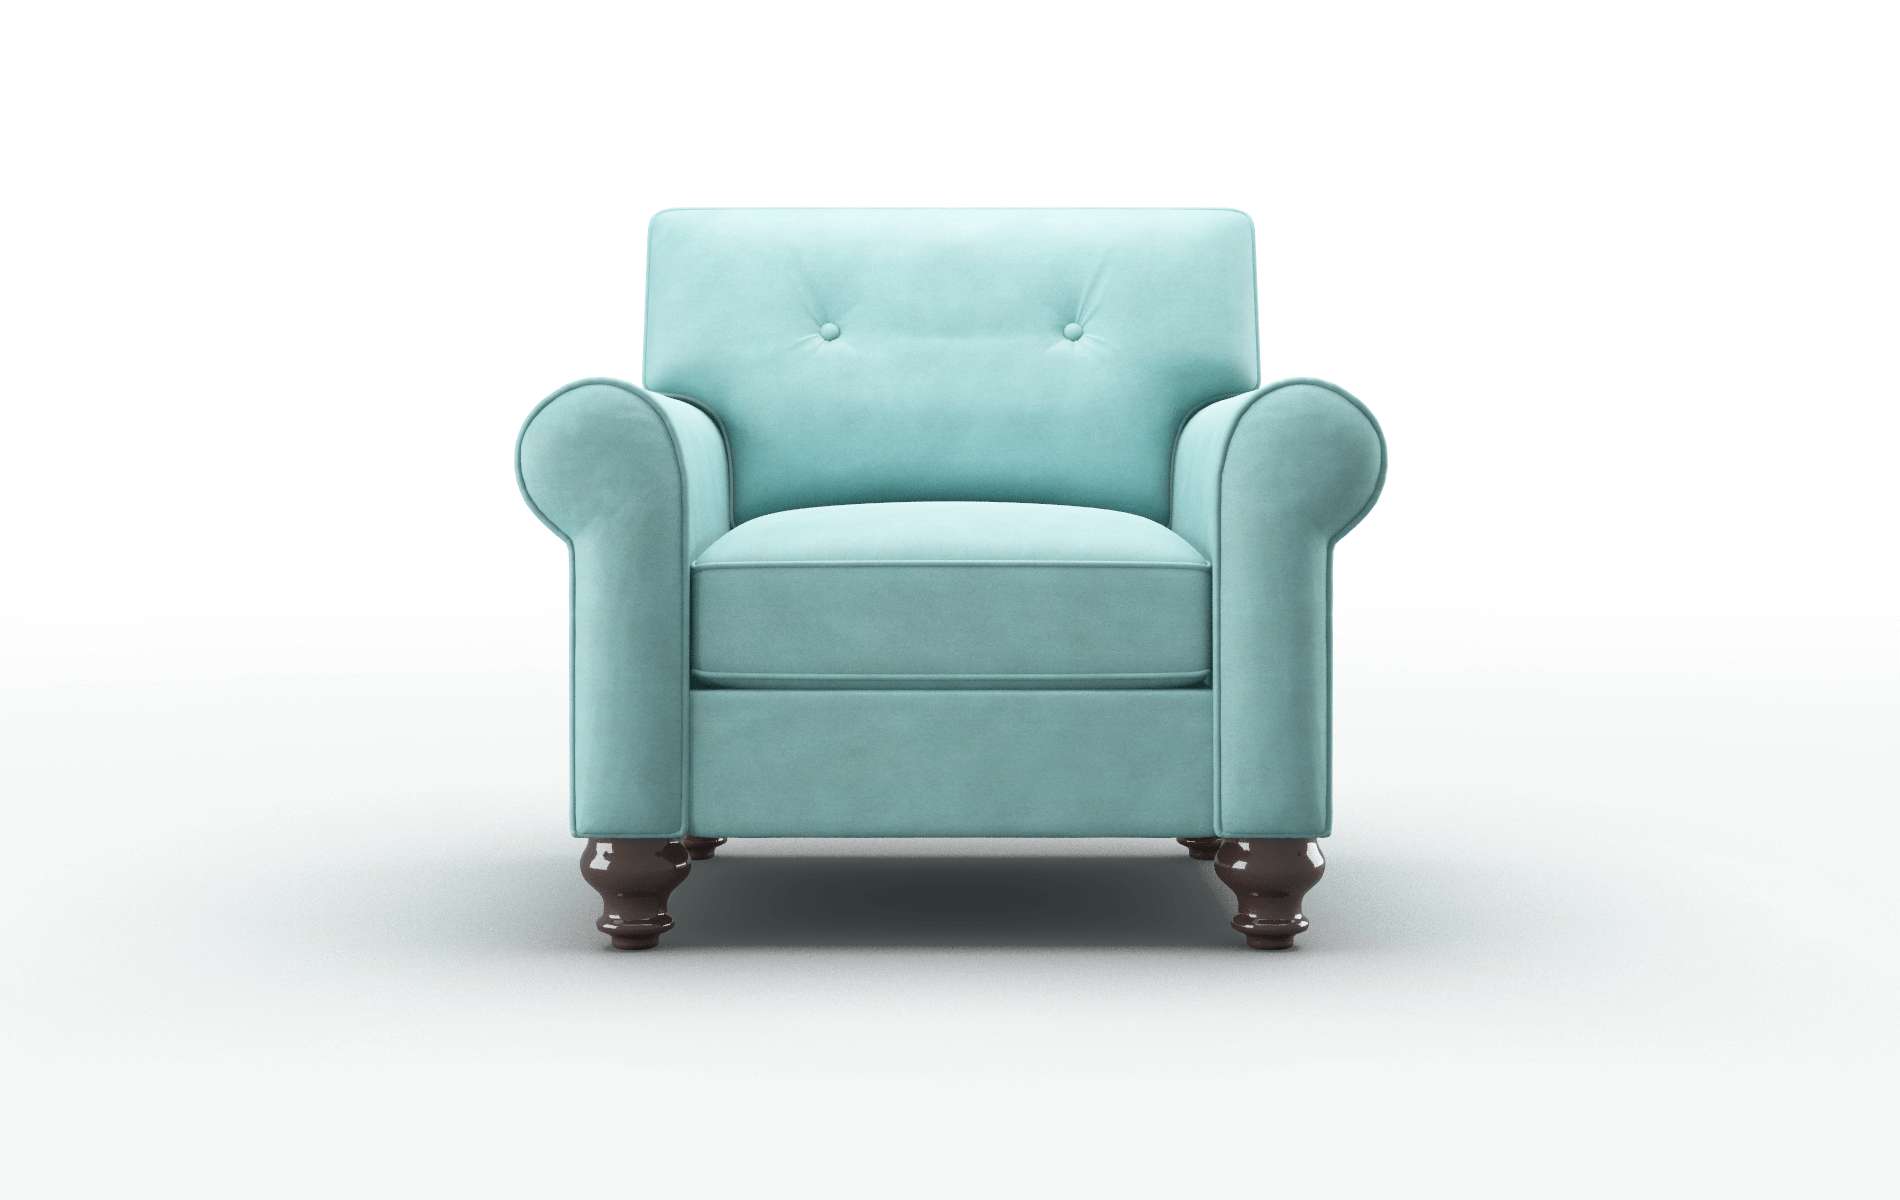 Farah Curious Turquoise chair espresso legs